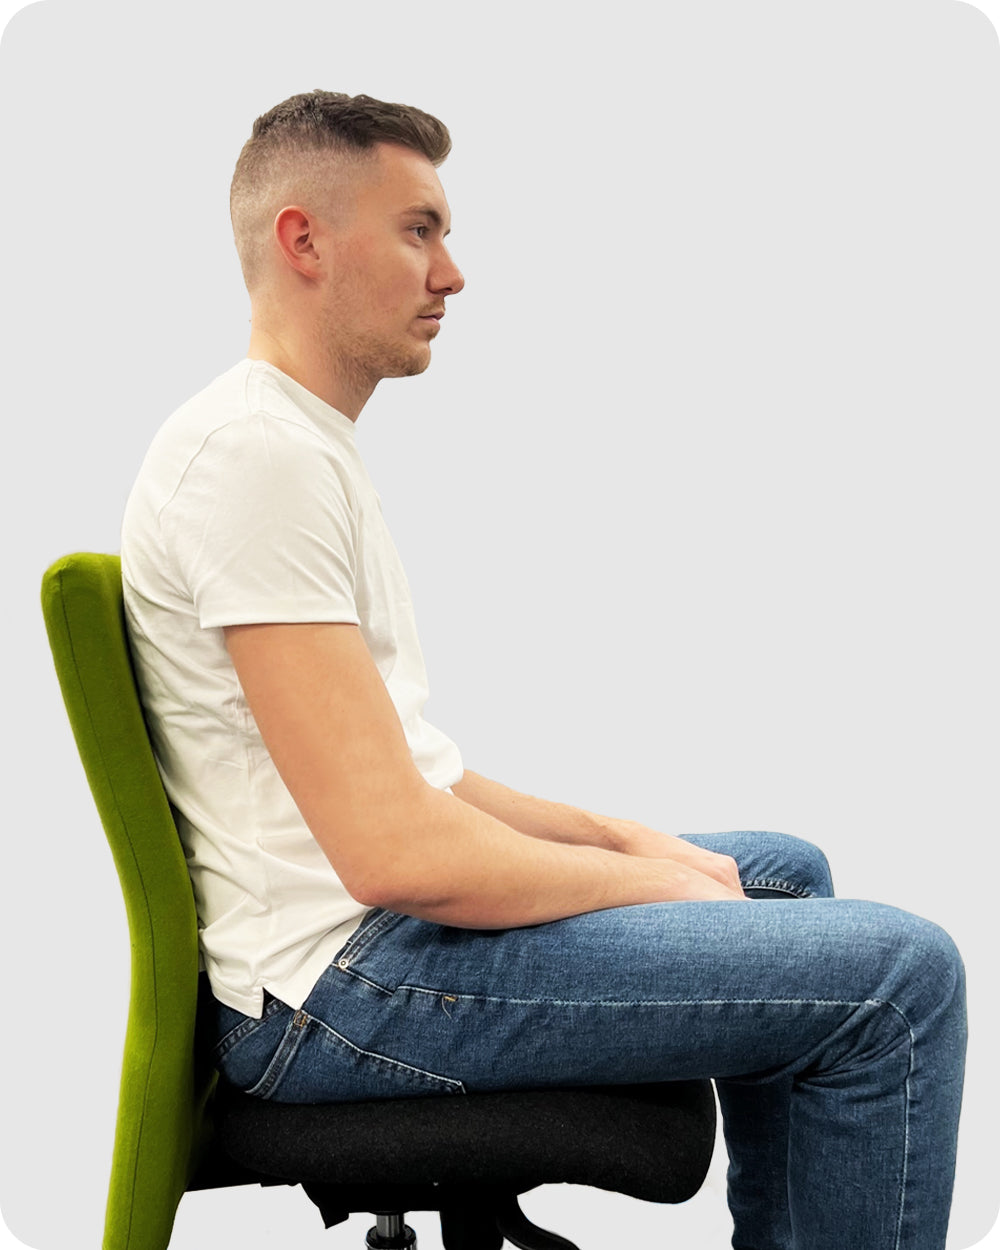 bad sitting posture